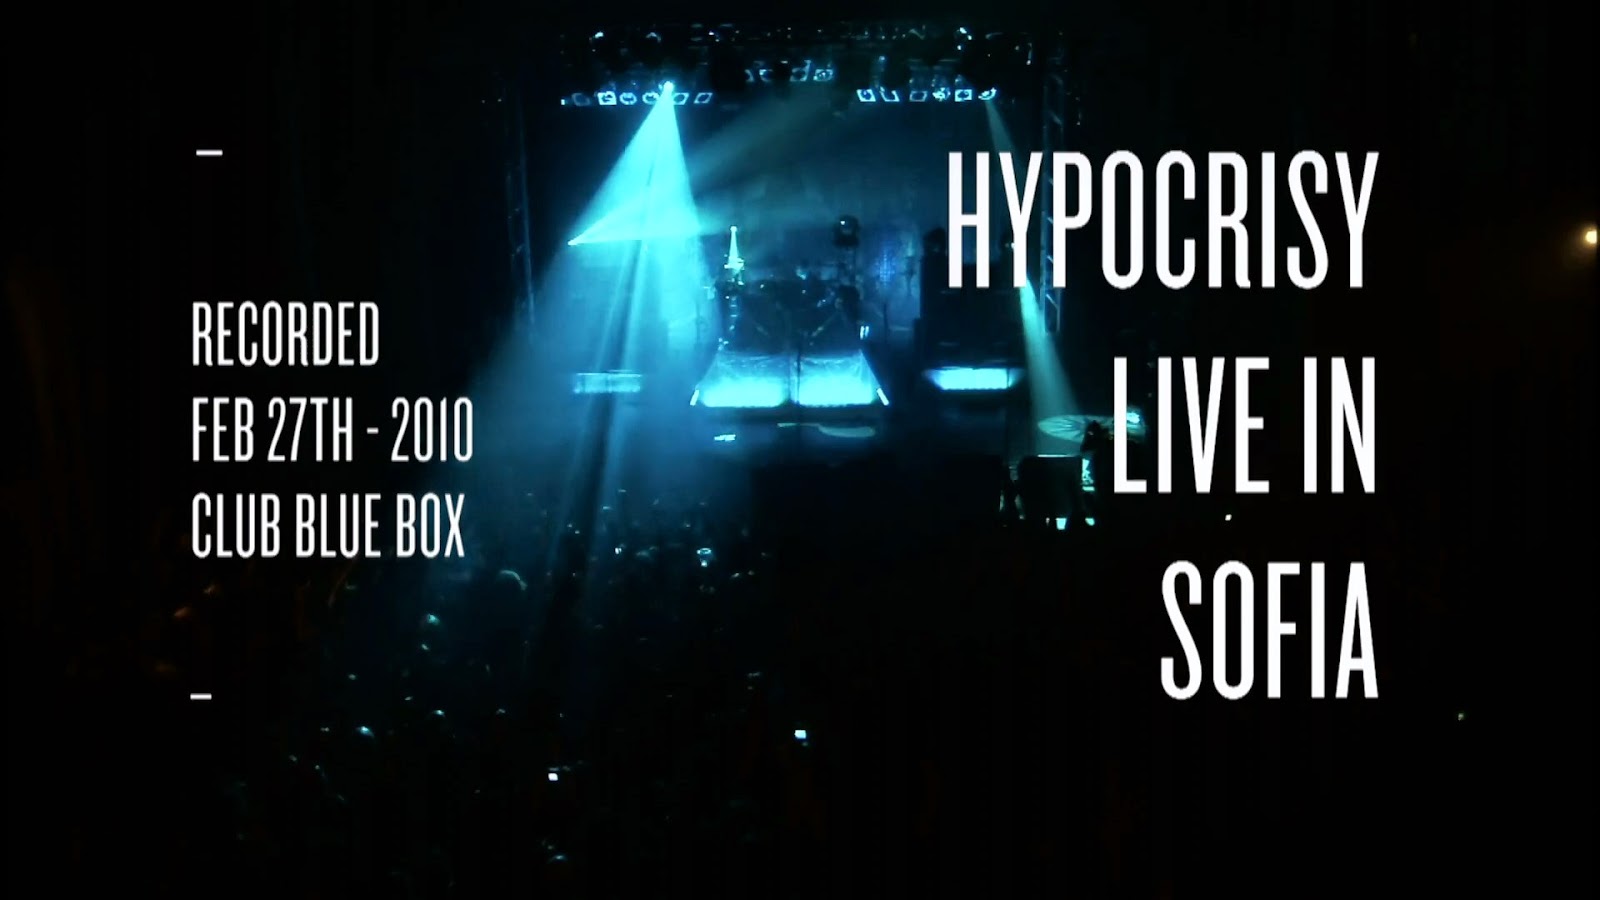 Hypocrisy |Hell Over Sofia + Documental |1080p.